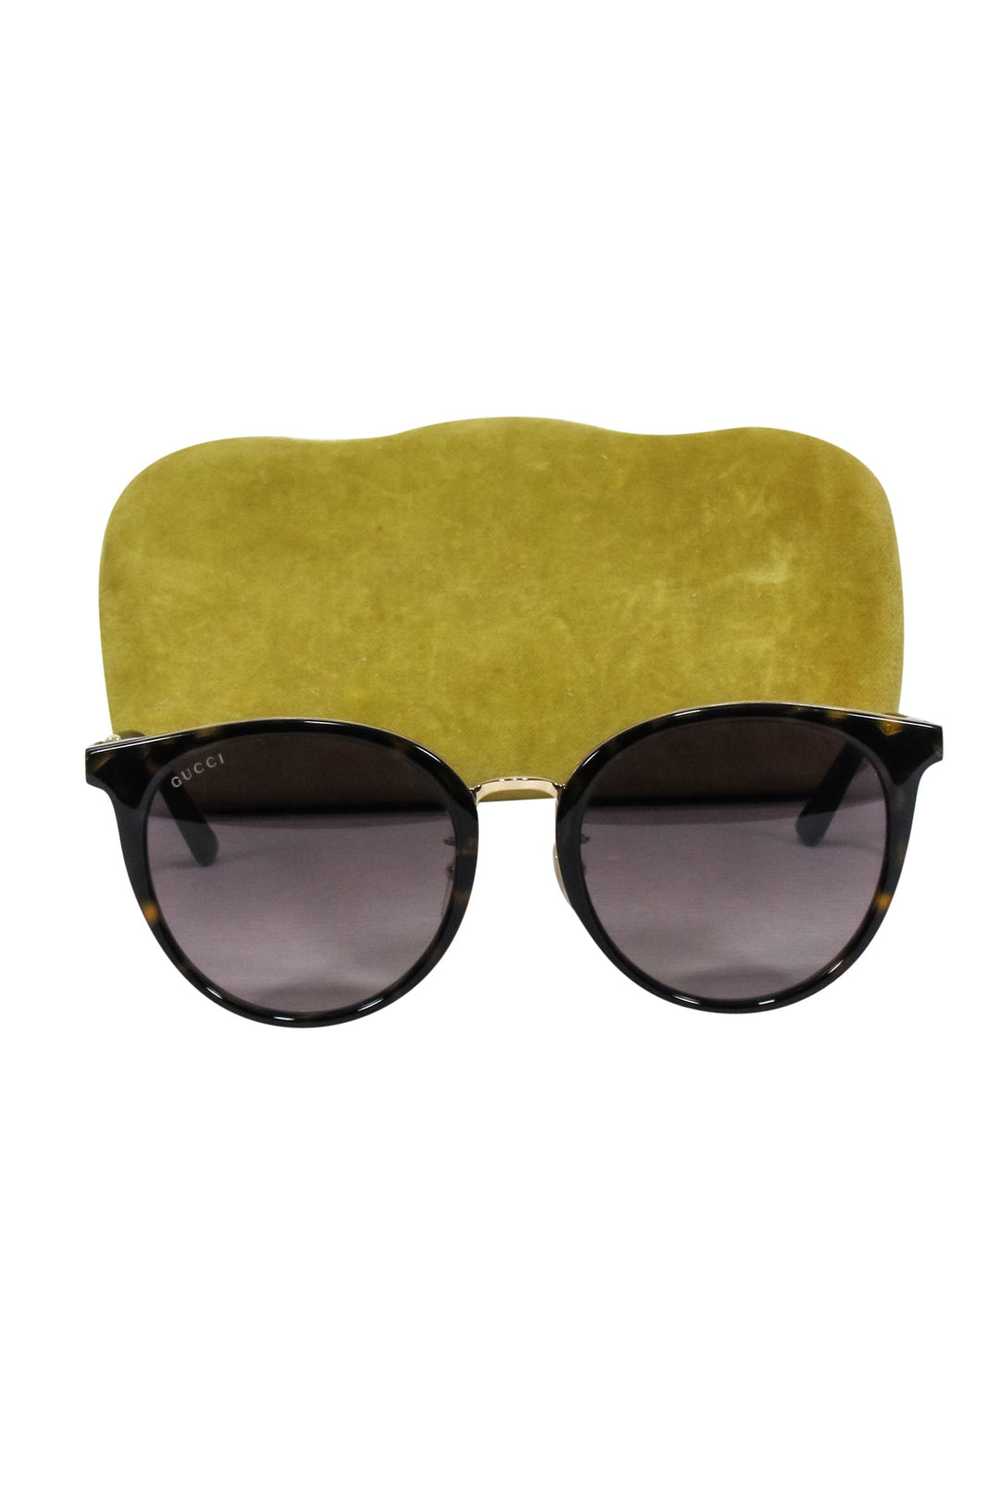 Gucci - Brown Tortoise Oversized Round Sunglasses - image 2